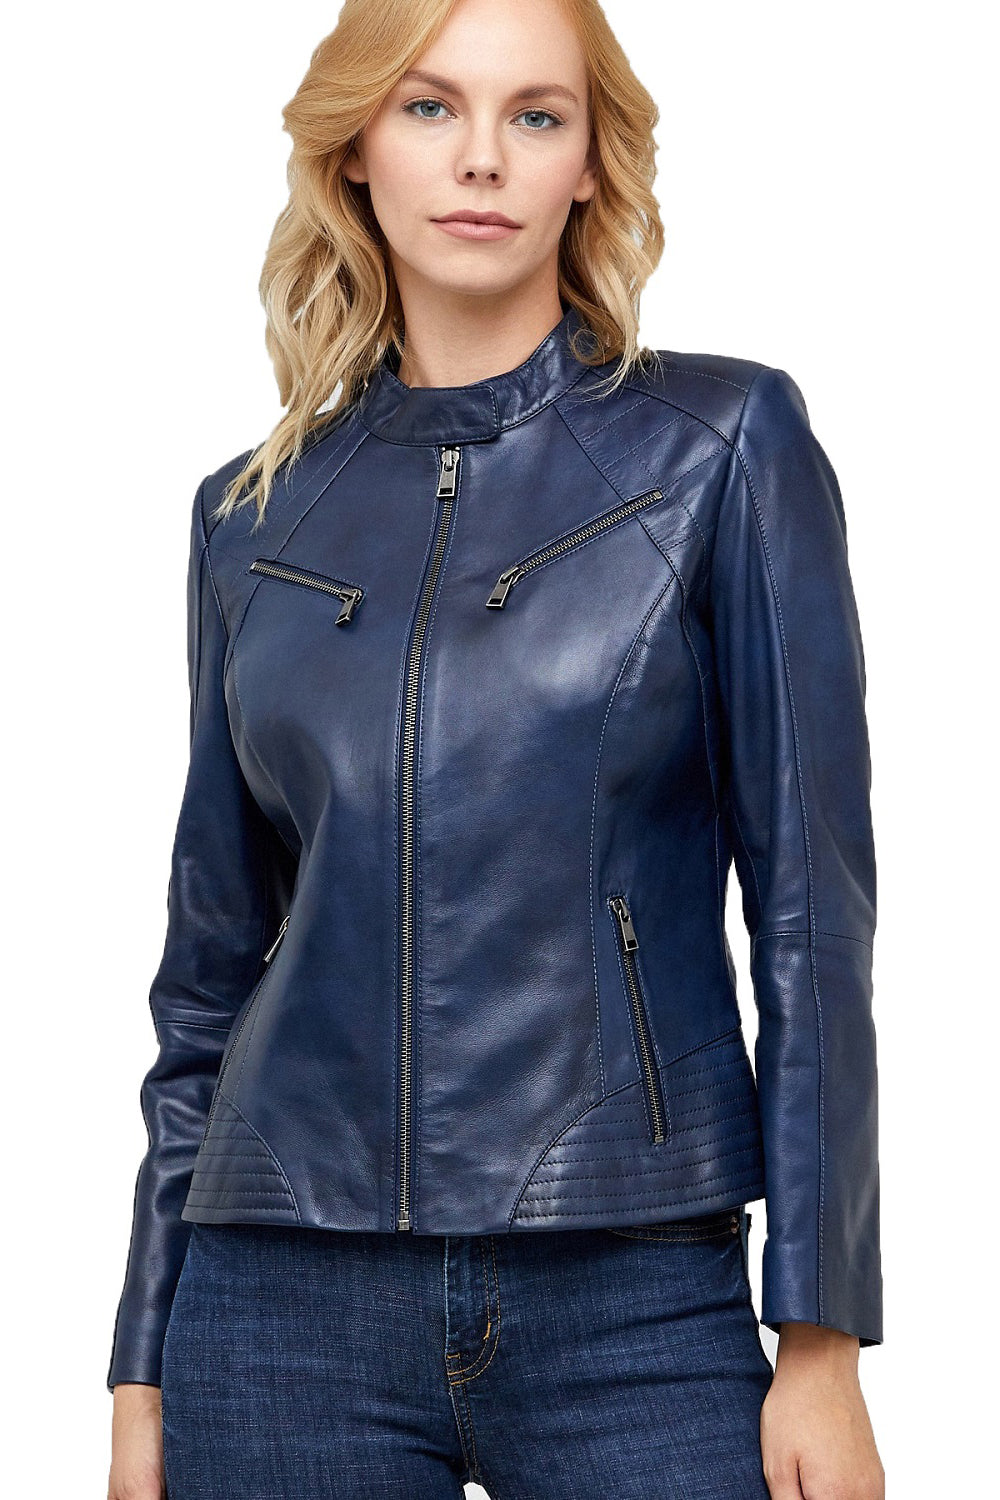 Women Genuine Leather Jacket WJ137 SkinOutfit